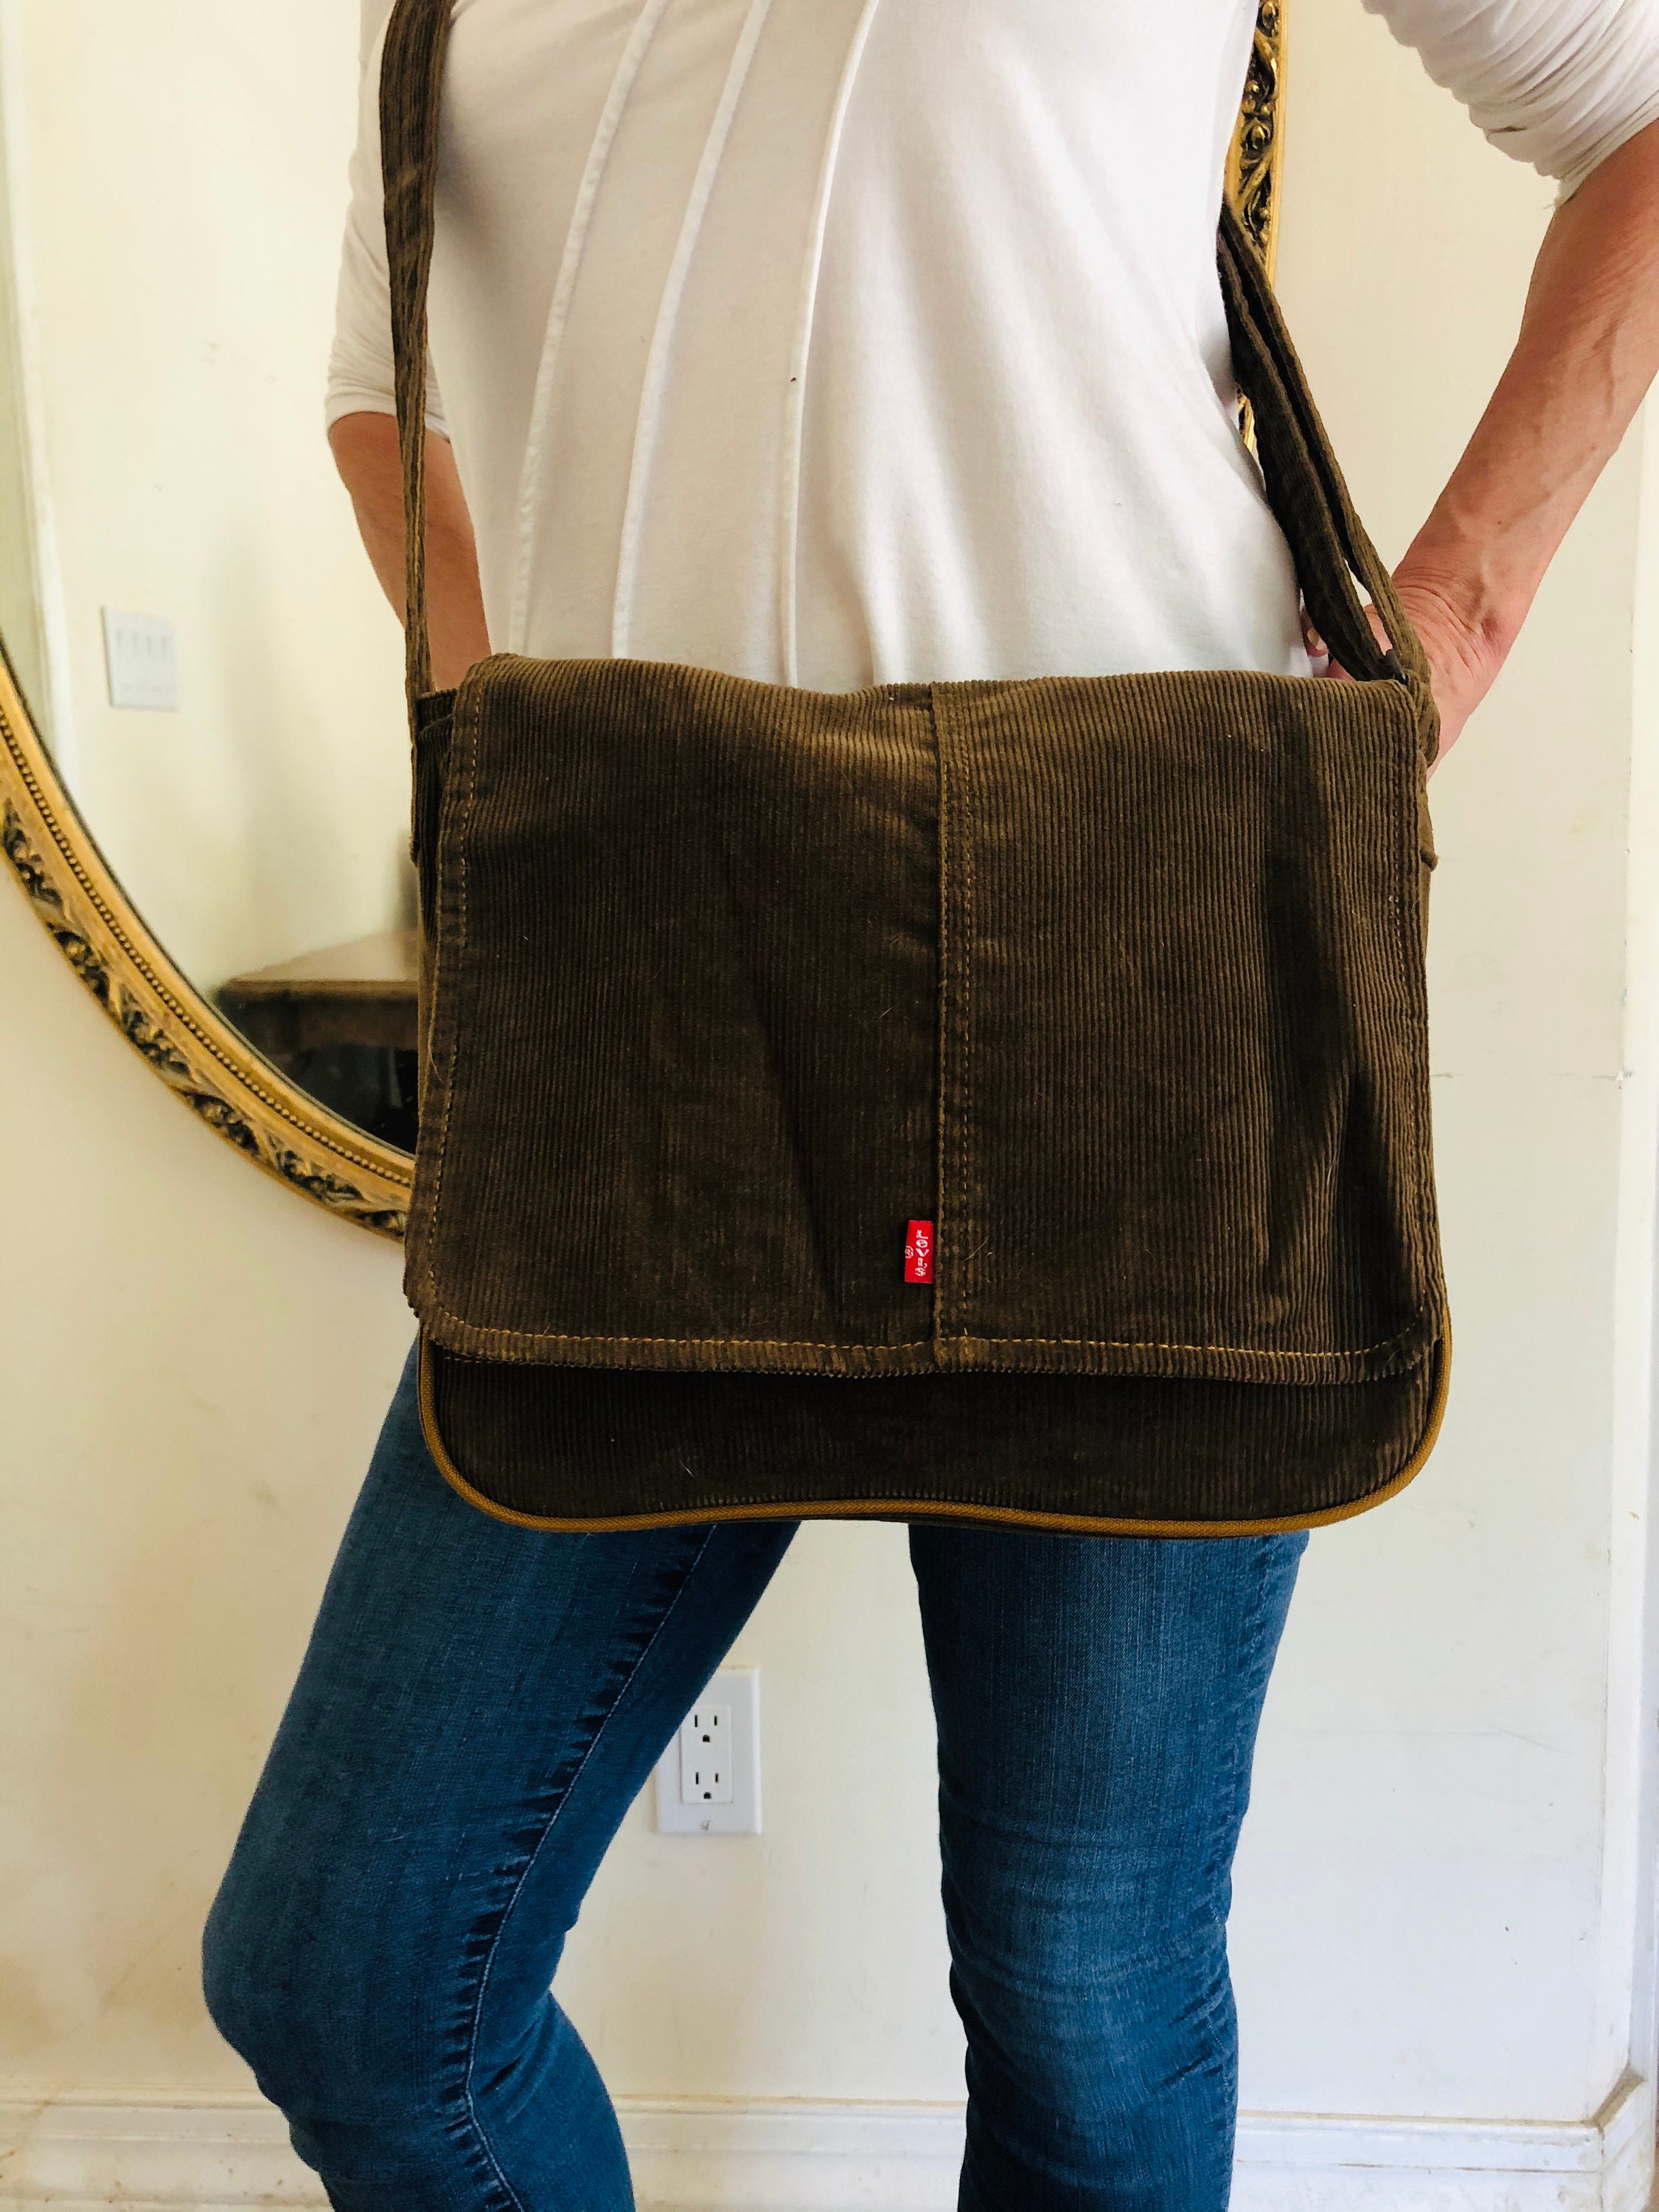 TikTok Loves Cactus Leather Bags - Meet Their Designer